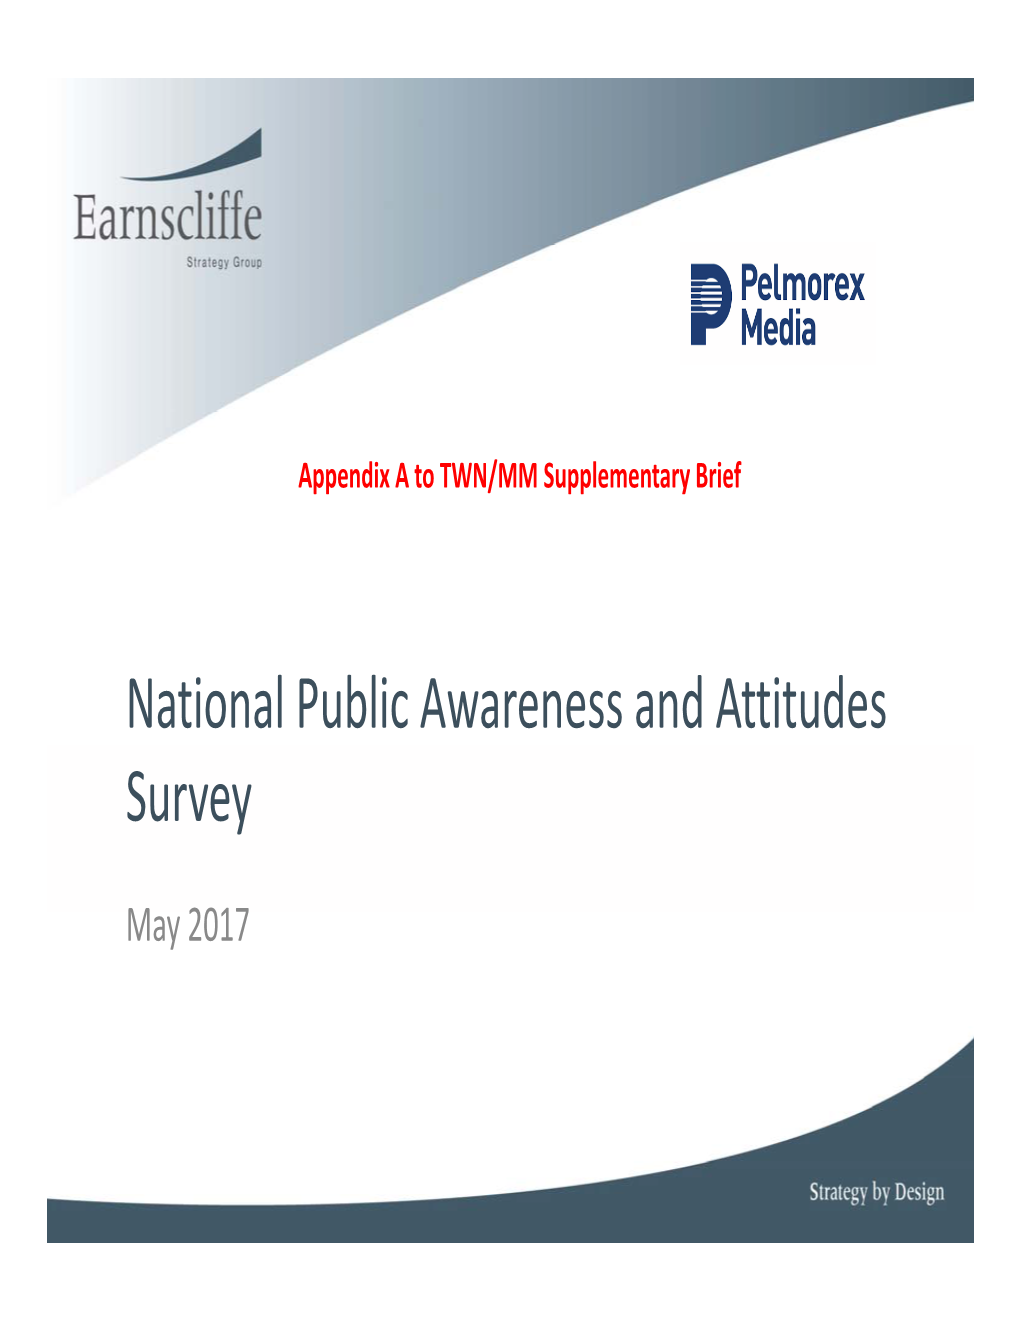 National Public Awareness and Attitudes Survey